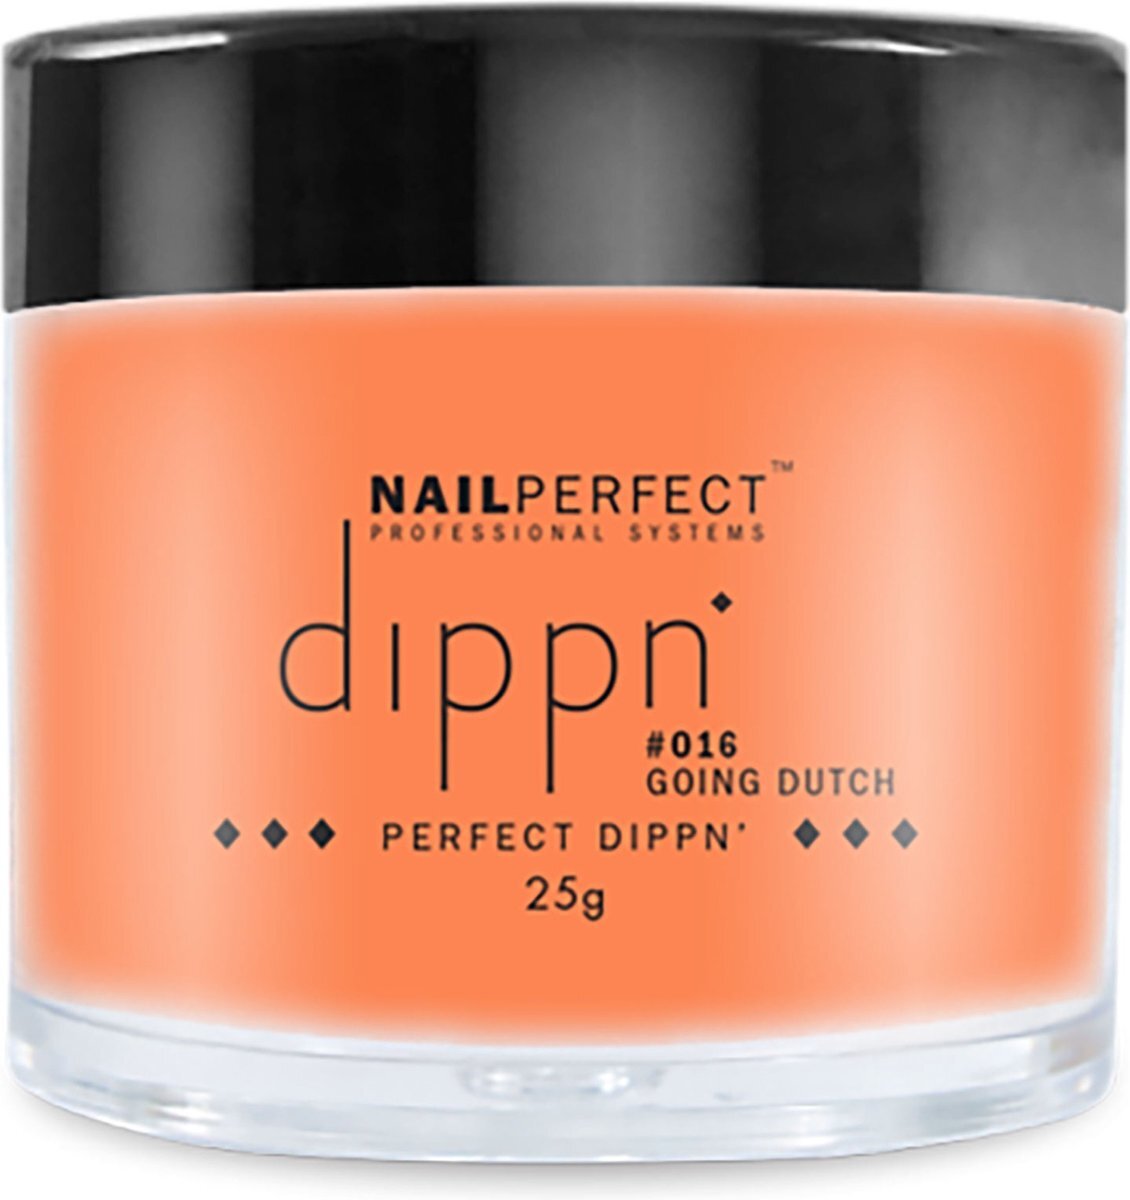 Nailperfect Nail Perfect - Dippn - #016 Going Dutch - 25gr